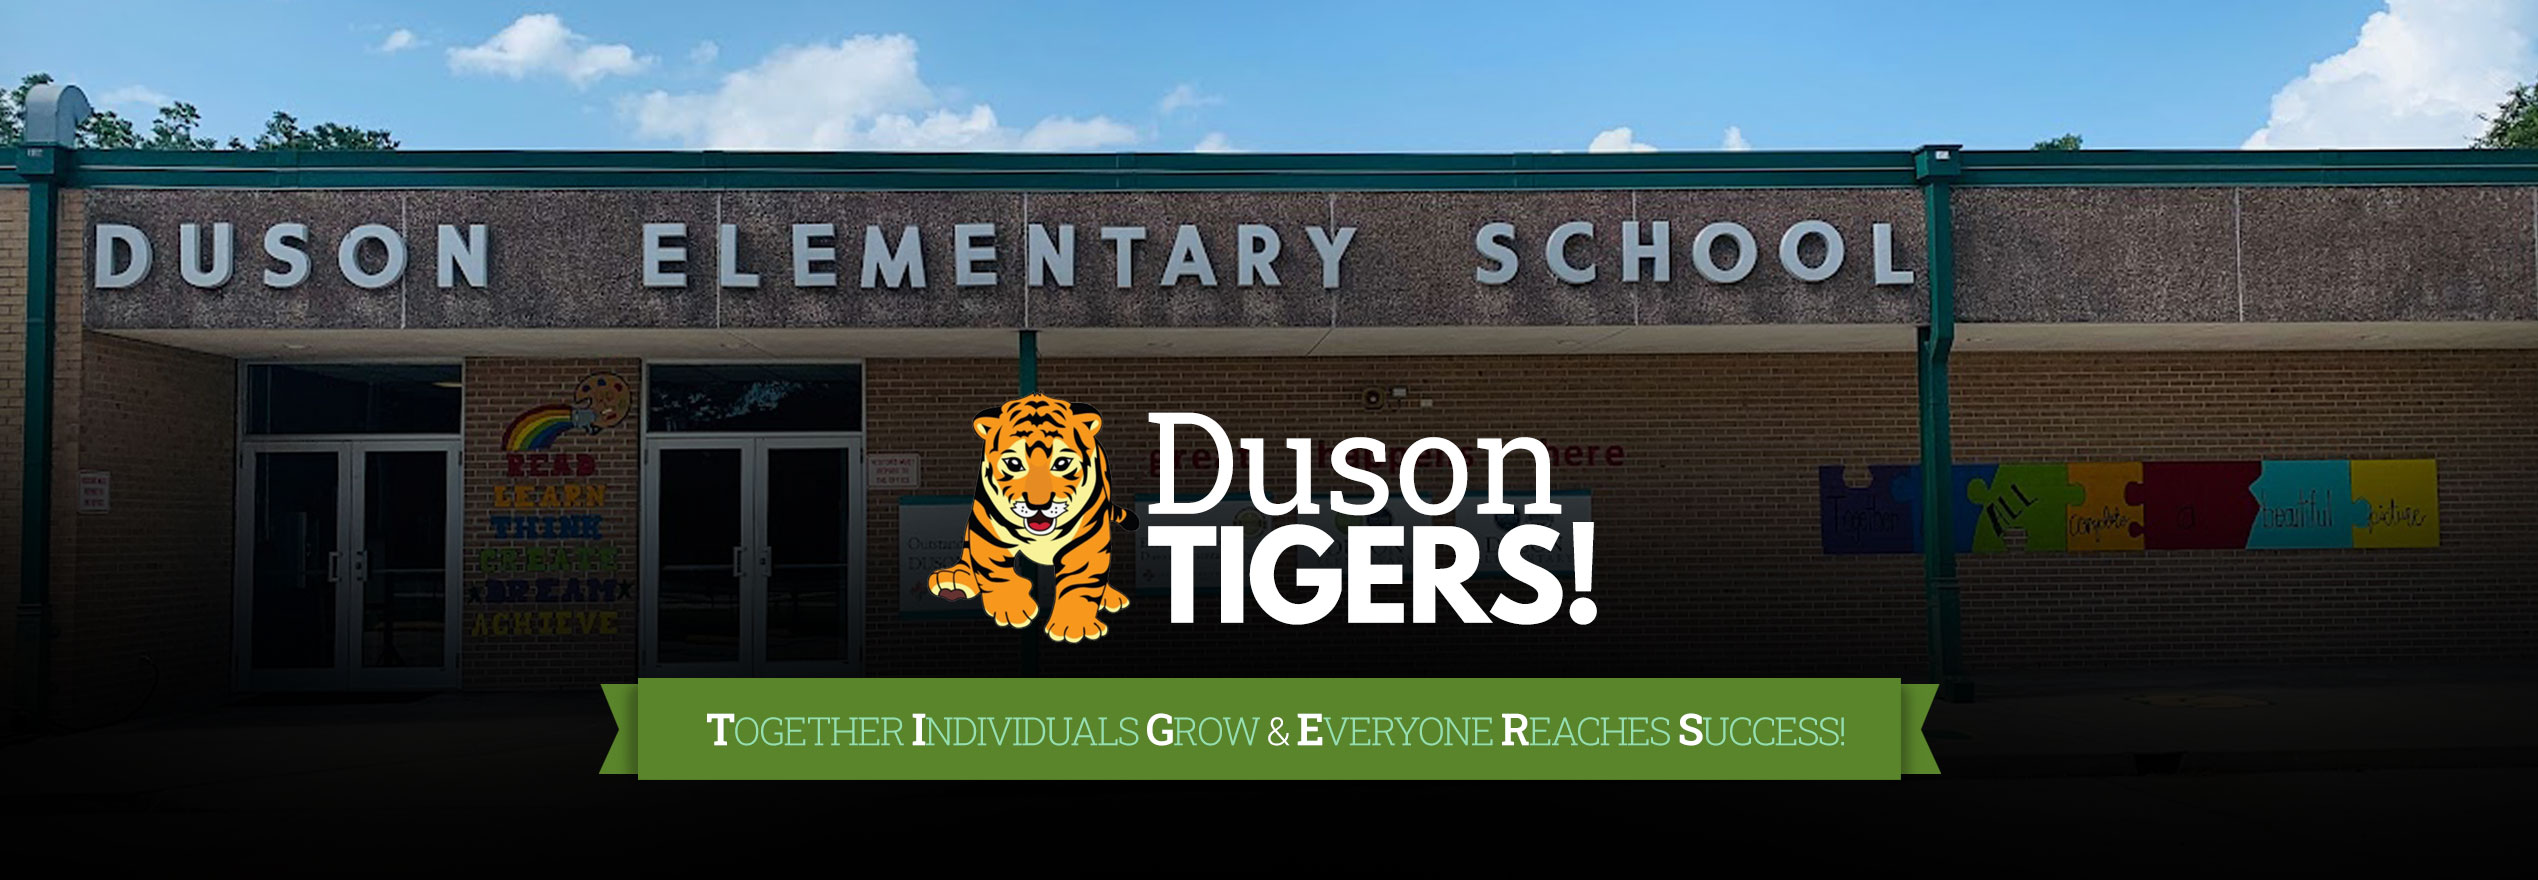 Duson Elementary School